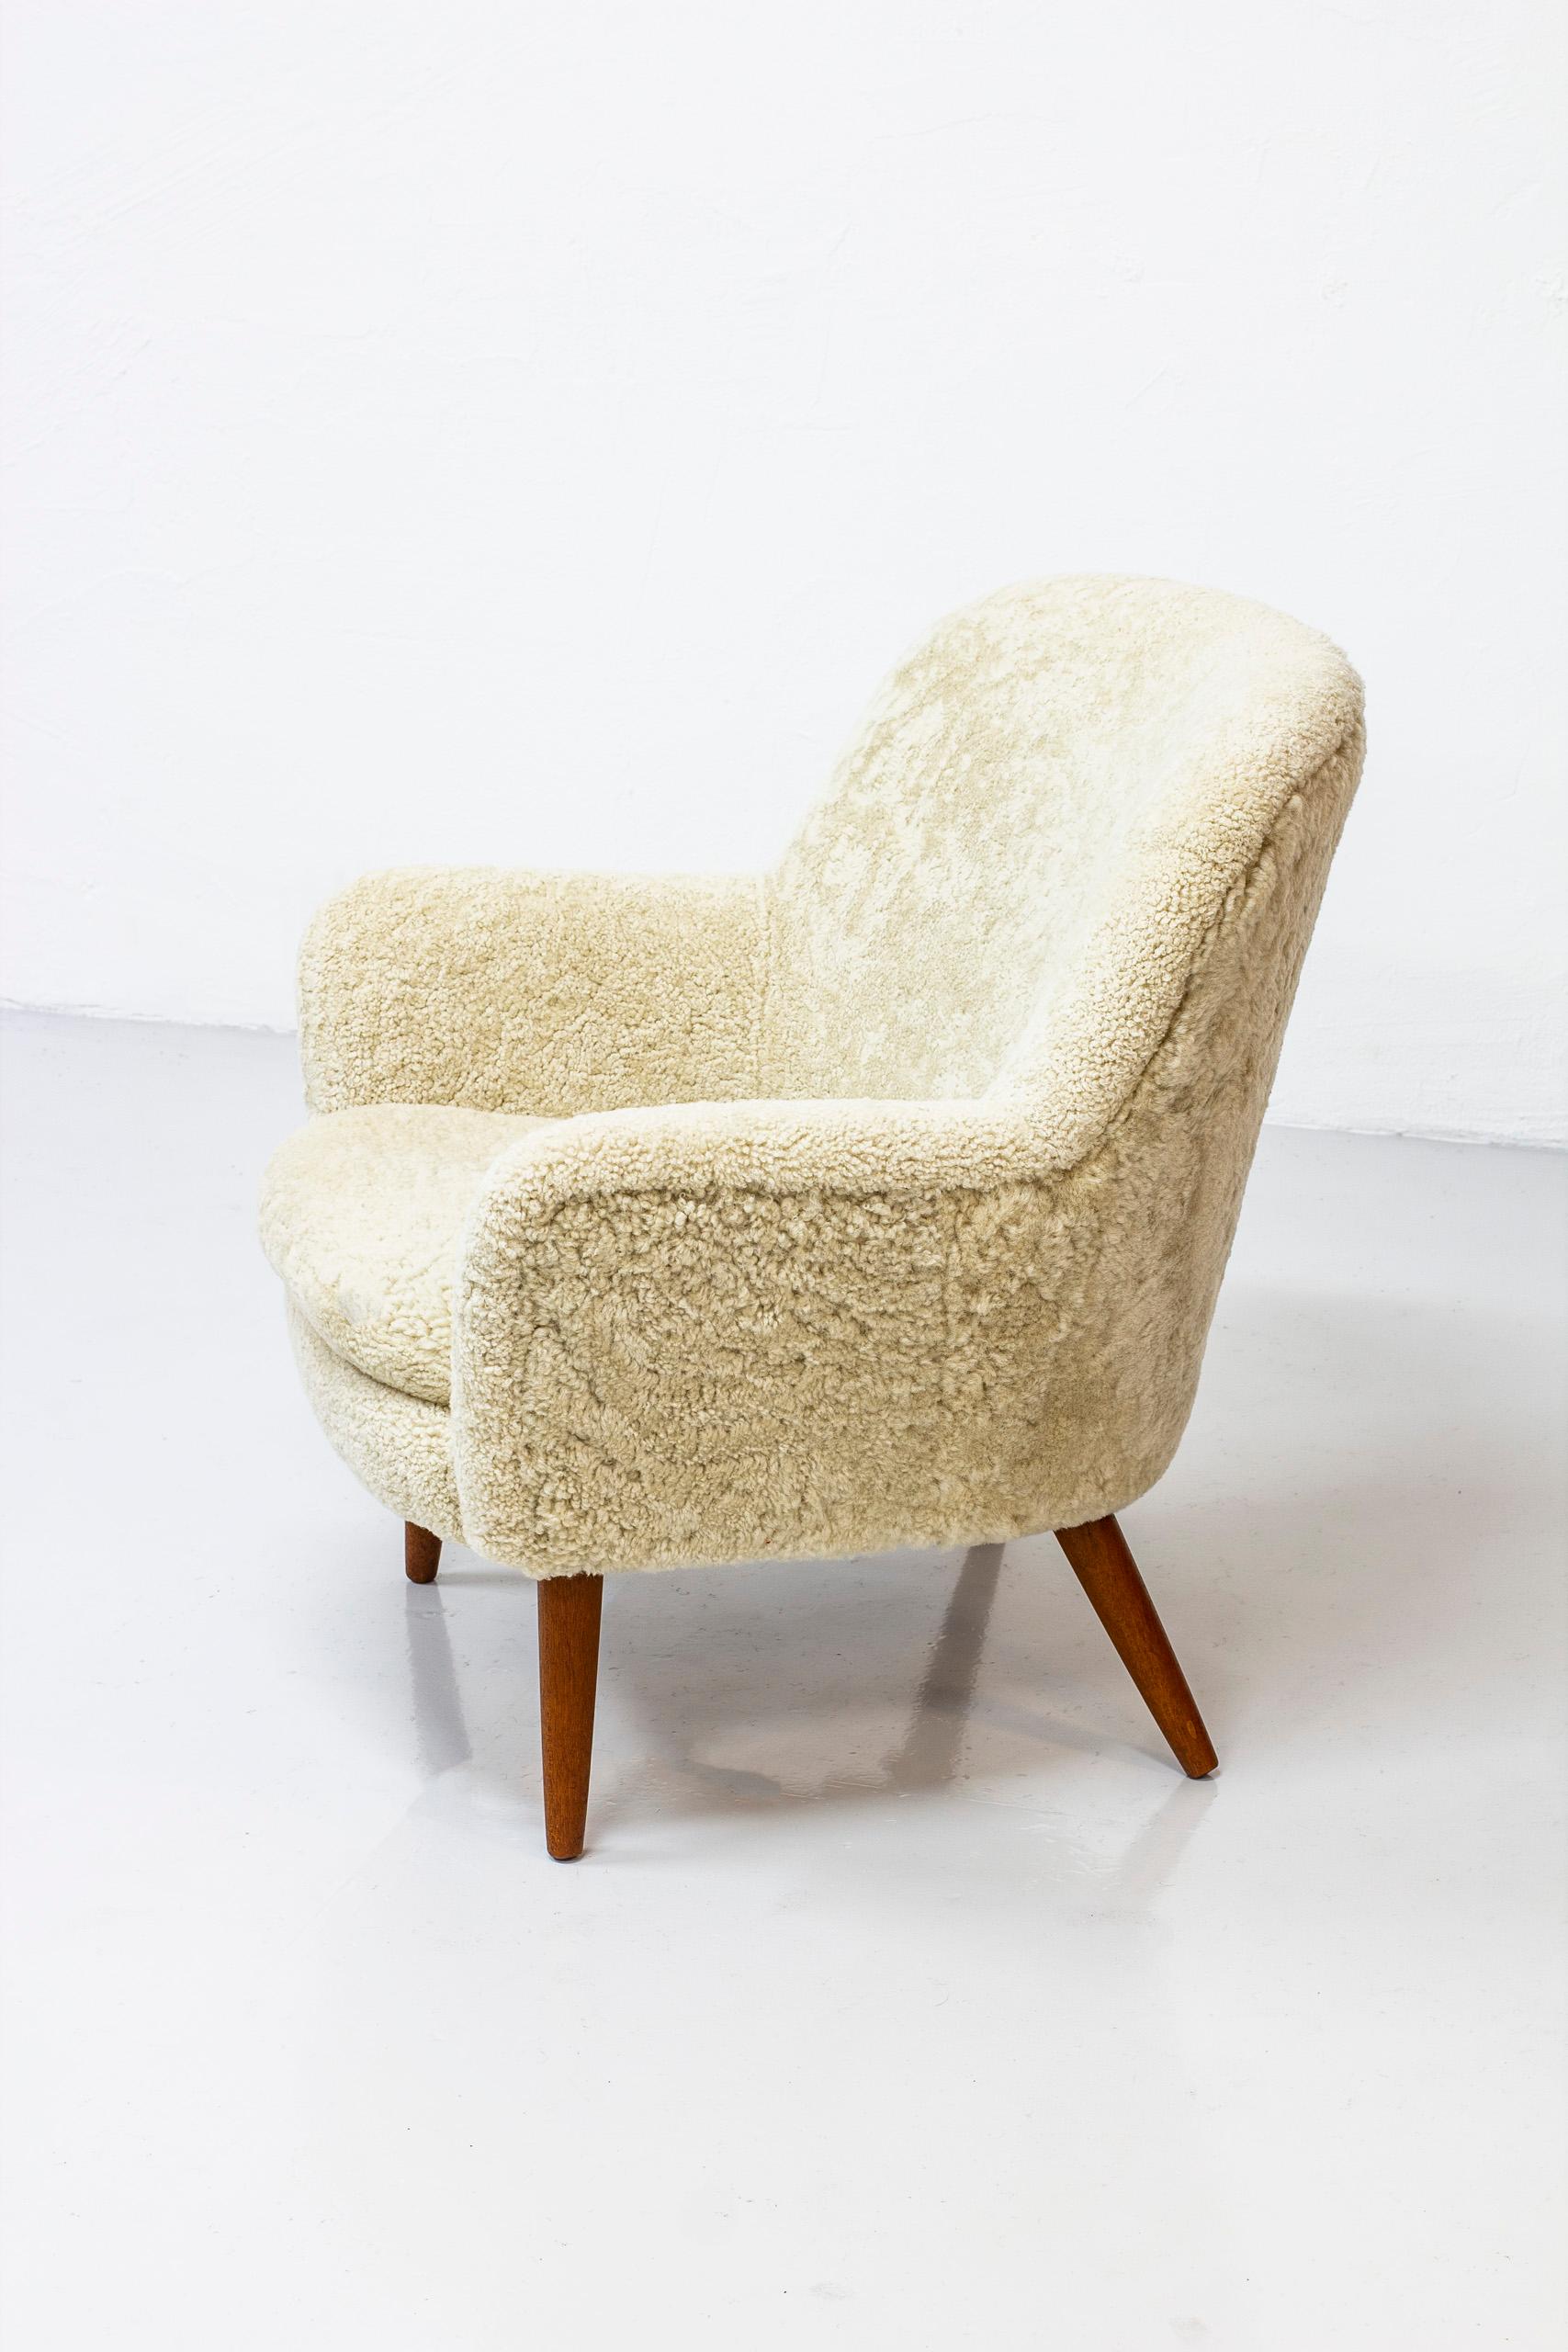 Scandinavian Modern Easy Chair with Sheep Skin by Hans Olsen, Denmark, 1950s